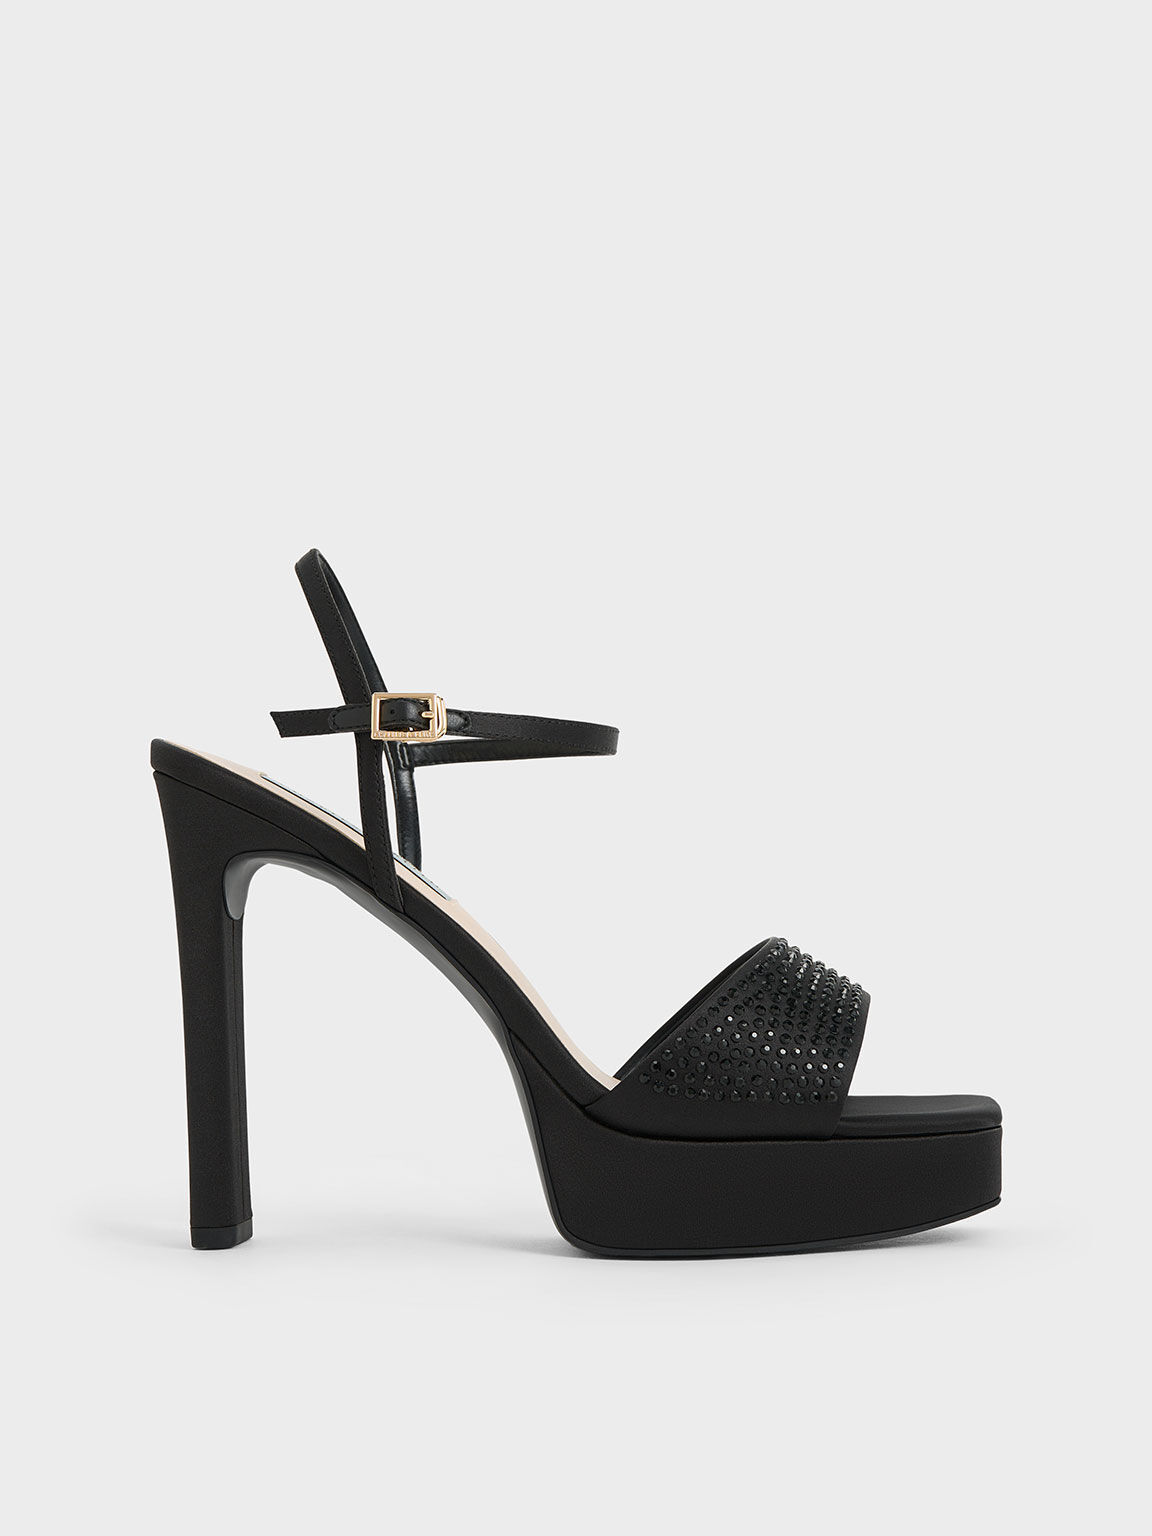 Cadey-Lee High Heel Sandal with Single Toe Strap | Schutz Shoes – SCHUTZ